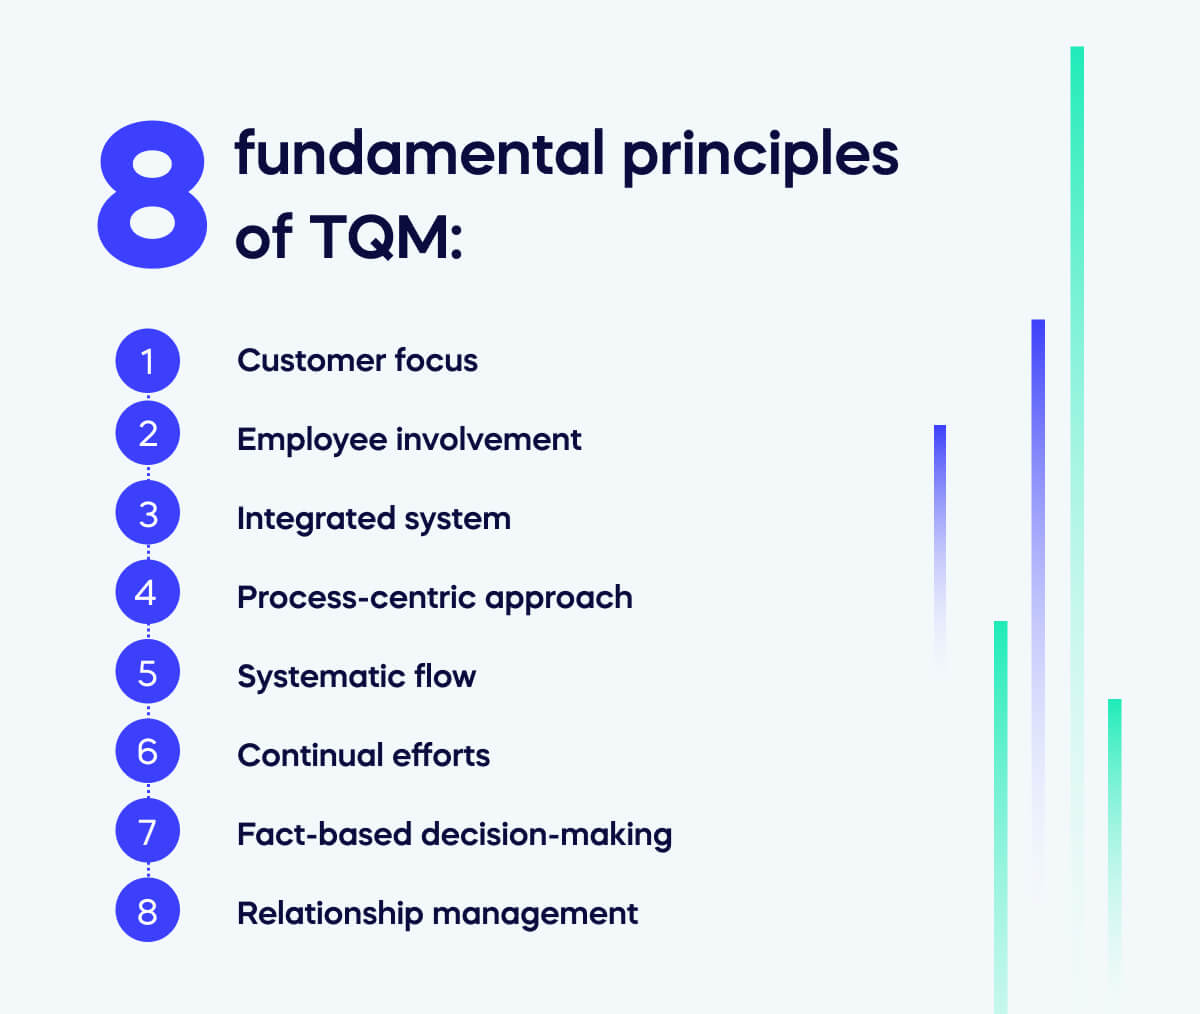 The 8 fundamental principles of TQM